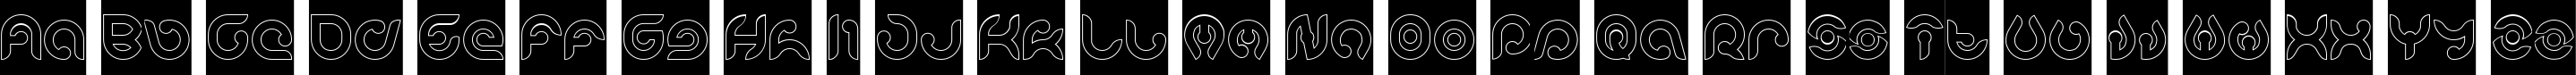 Пример написания английского алфавита шрифтом KIOSHIMA-Outlined-Inverse